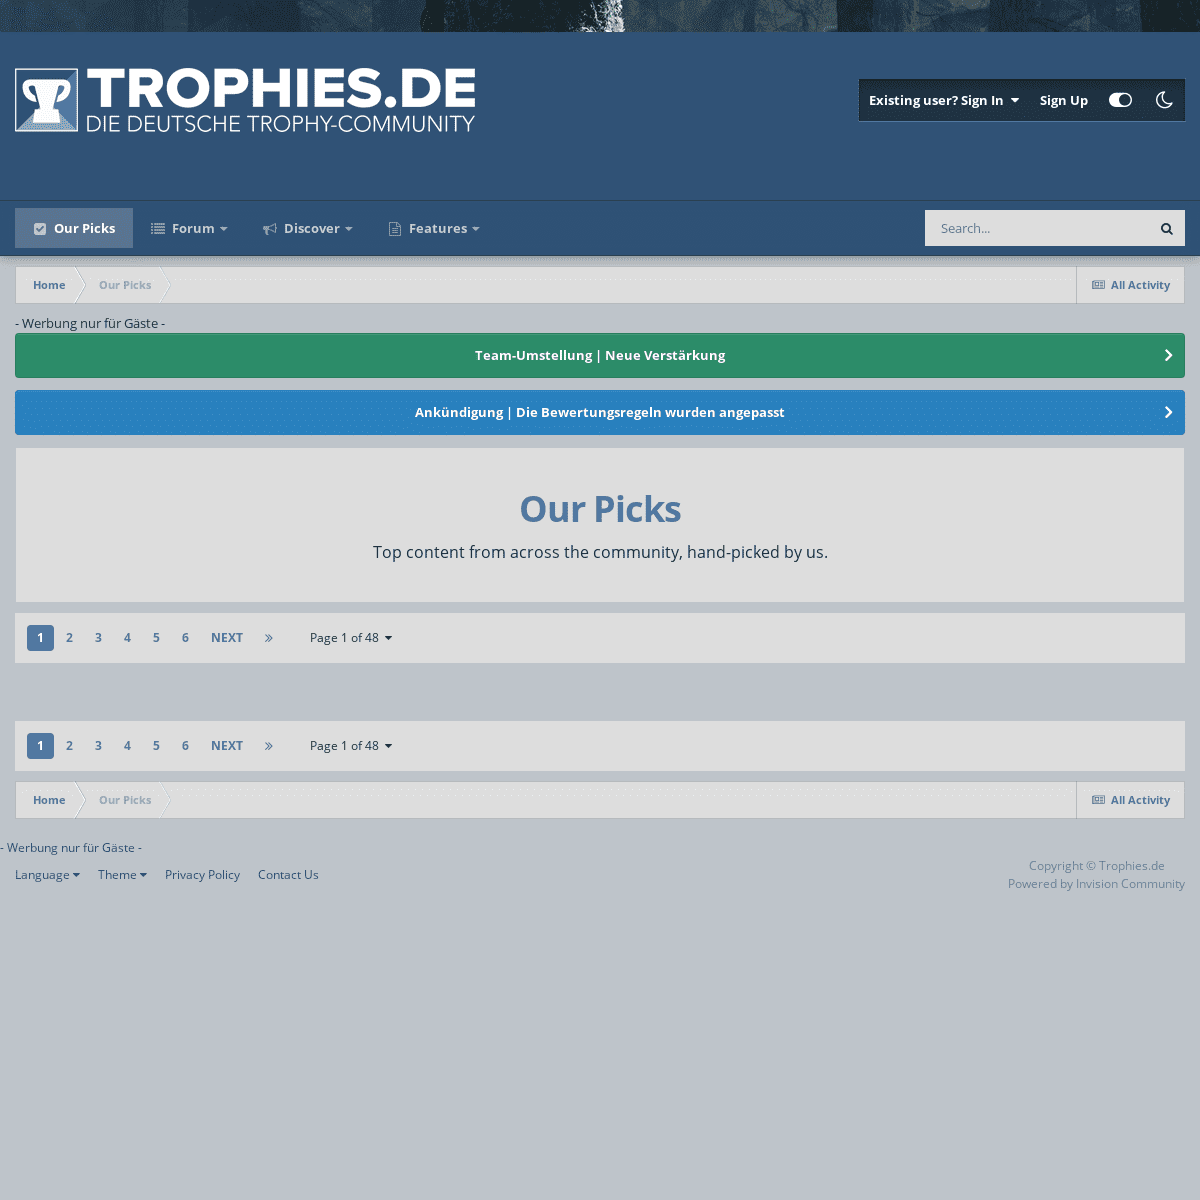 A complete backup of https://trophies.de